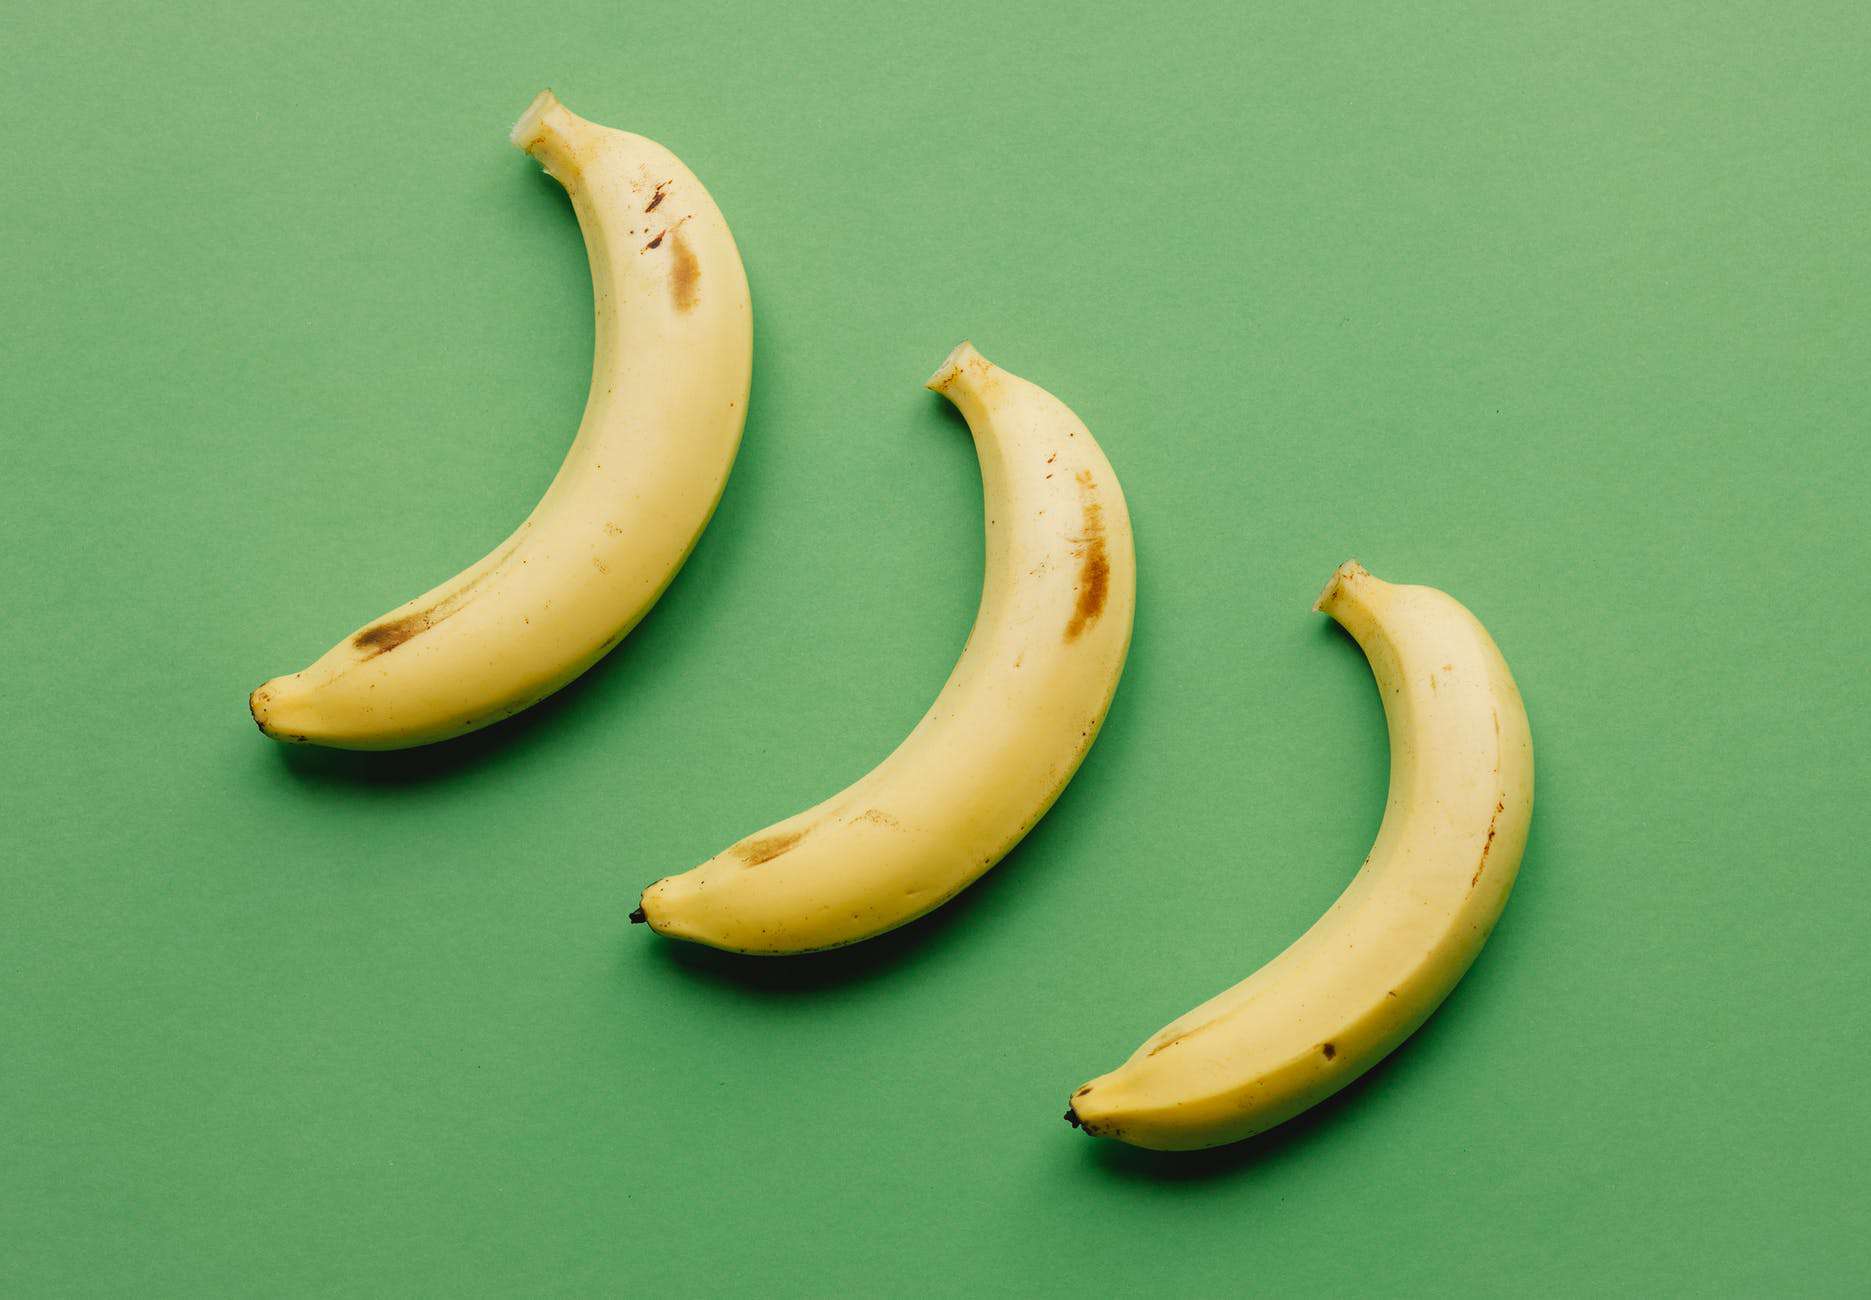 ripe bananas on green surface